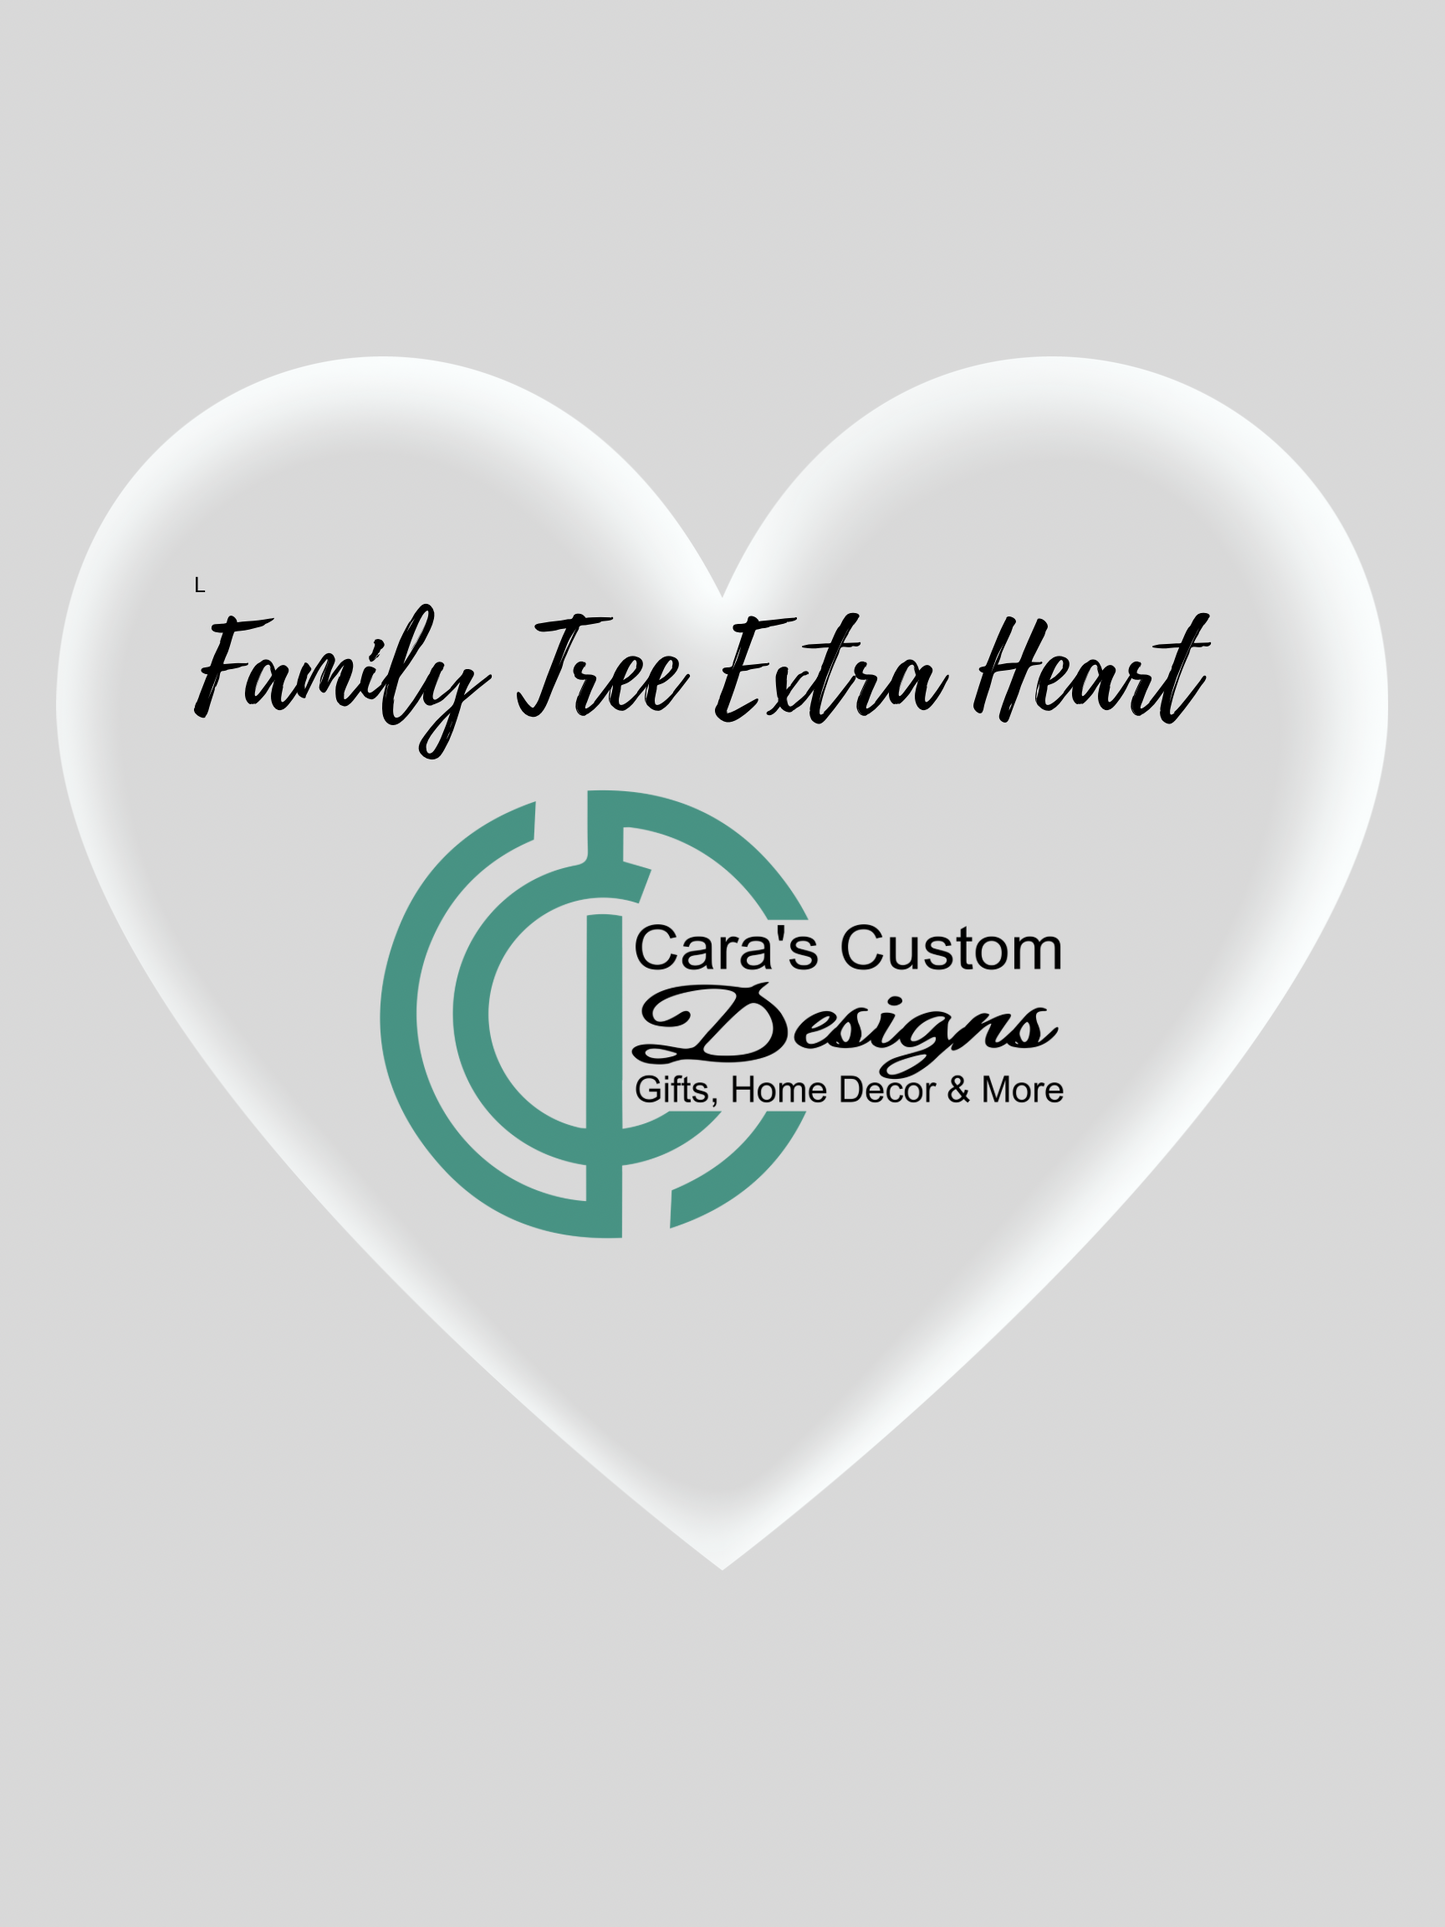 Extra Family Tree Heart - after purchase of family tree